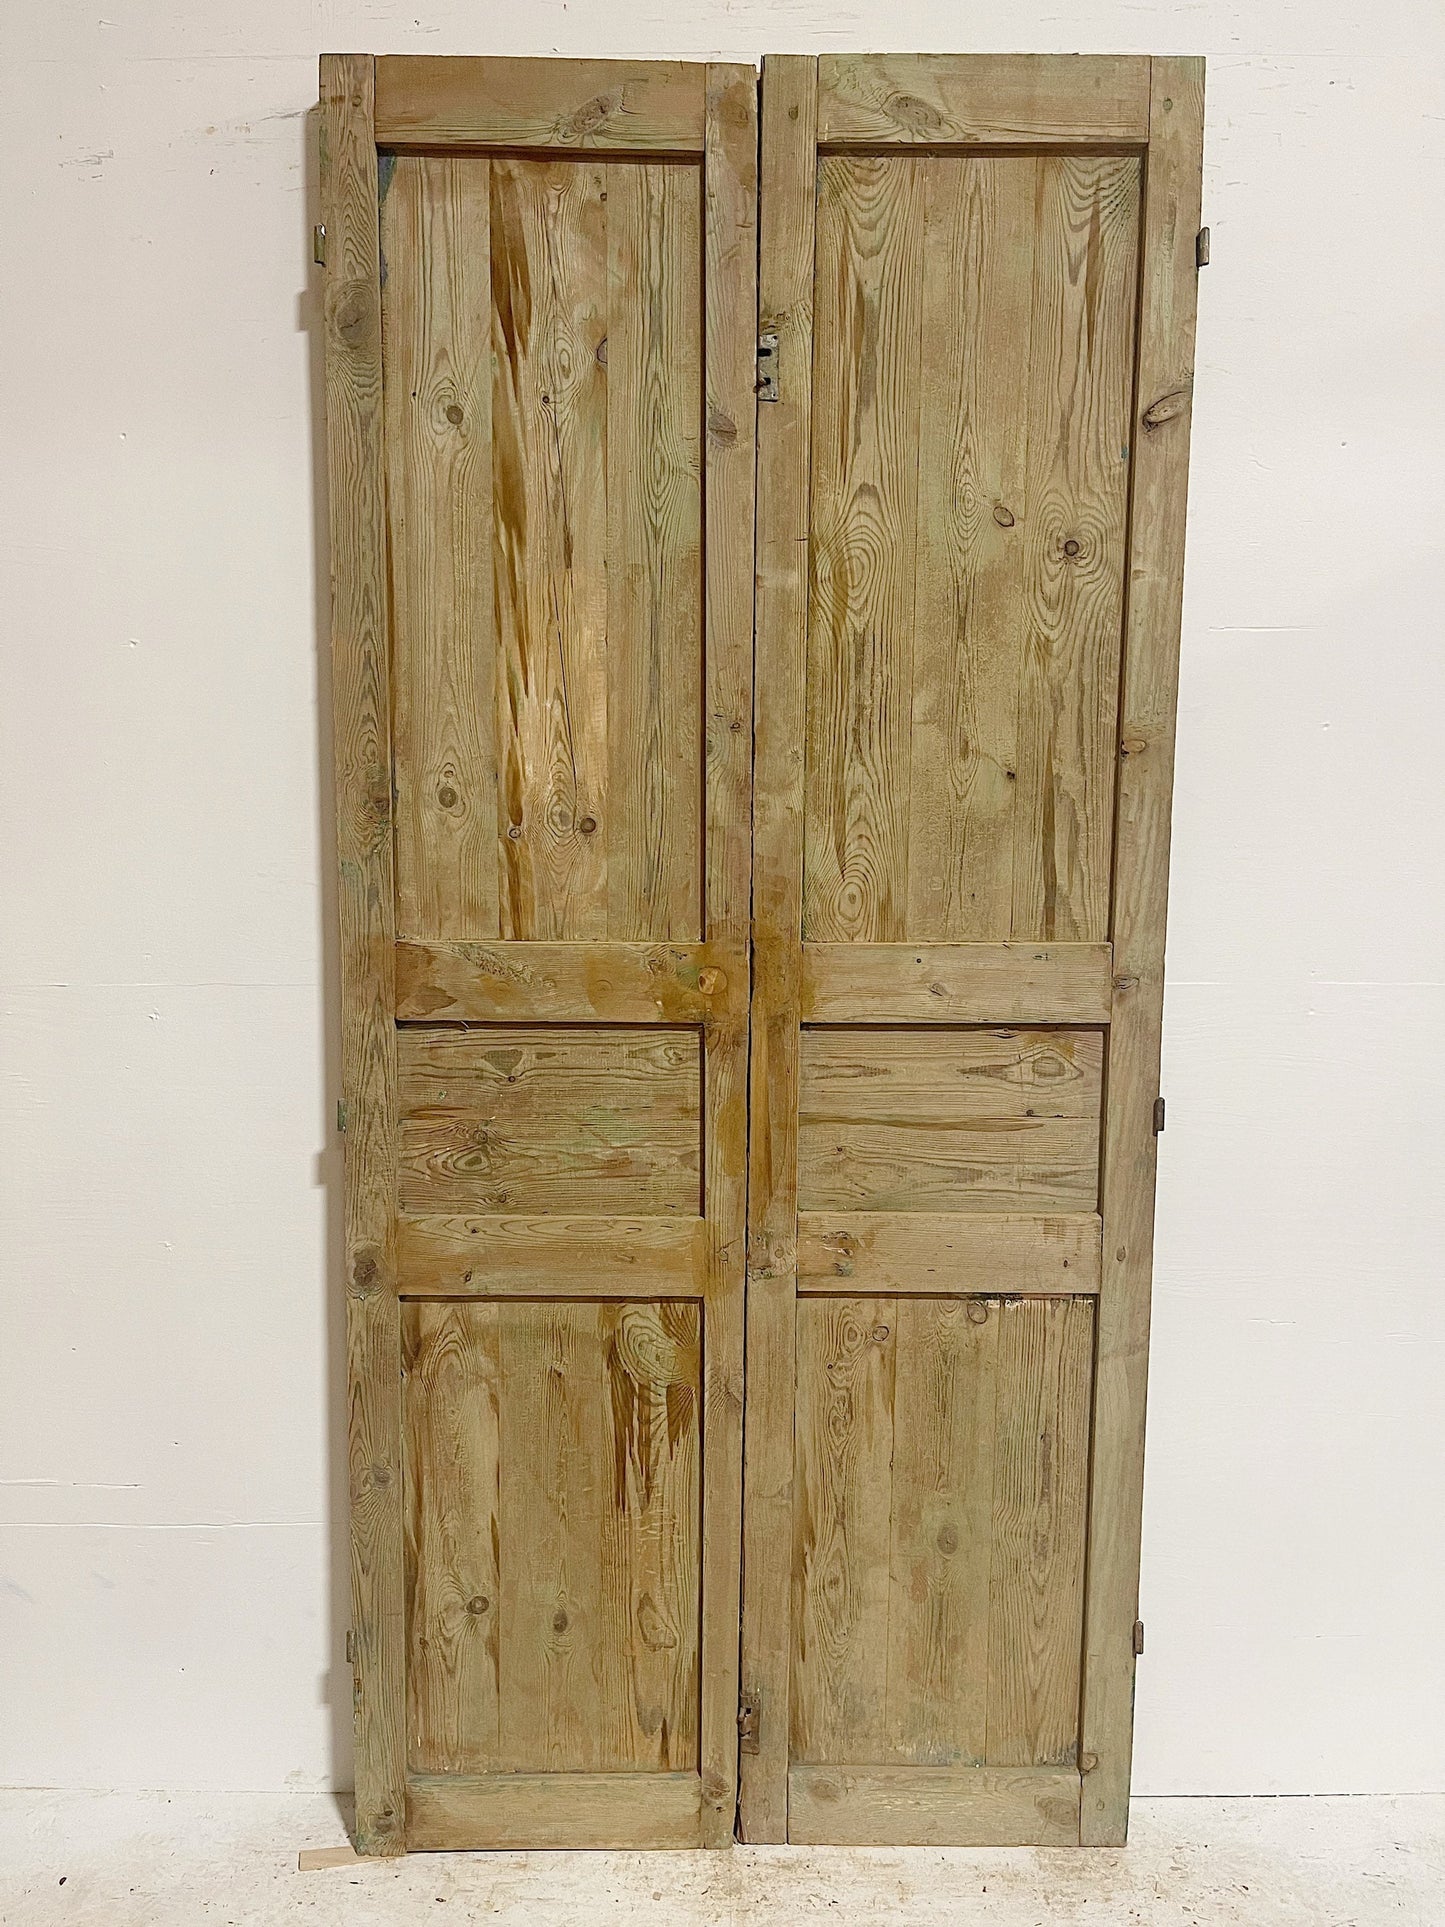 Antique French doors (94.75x43.5) E1019